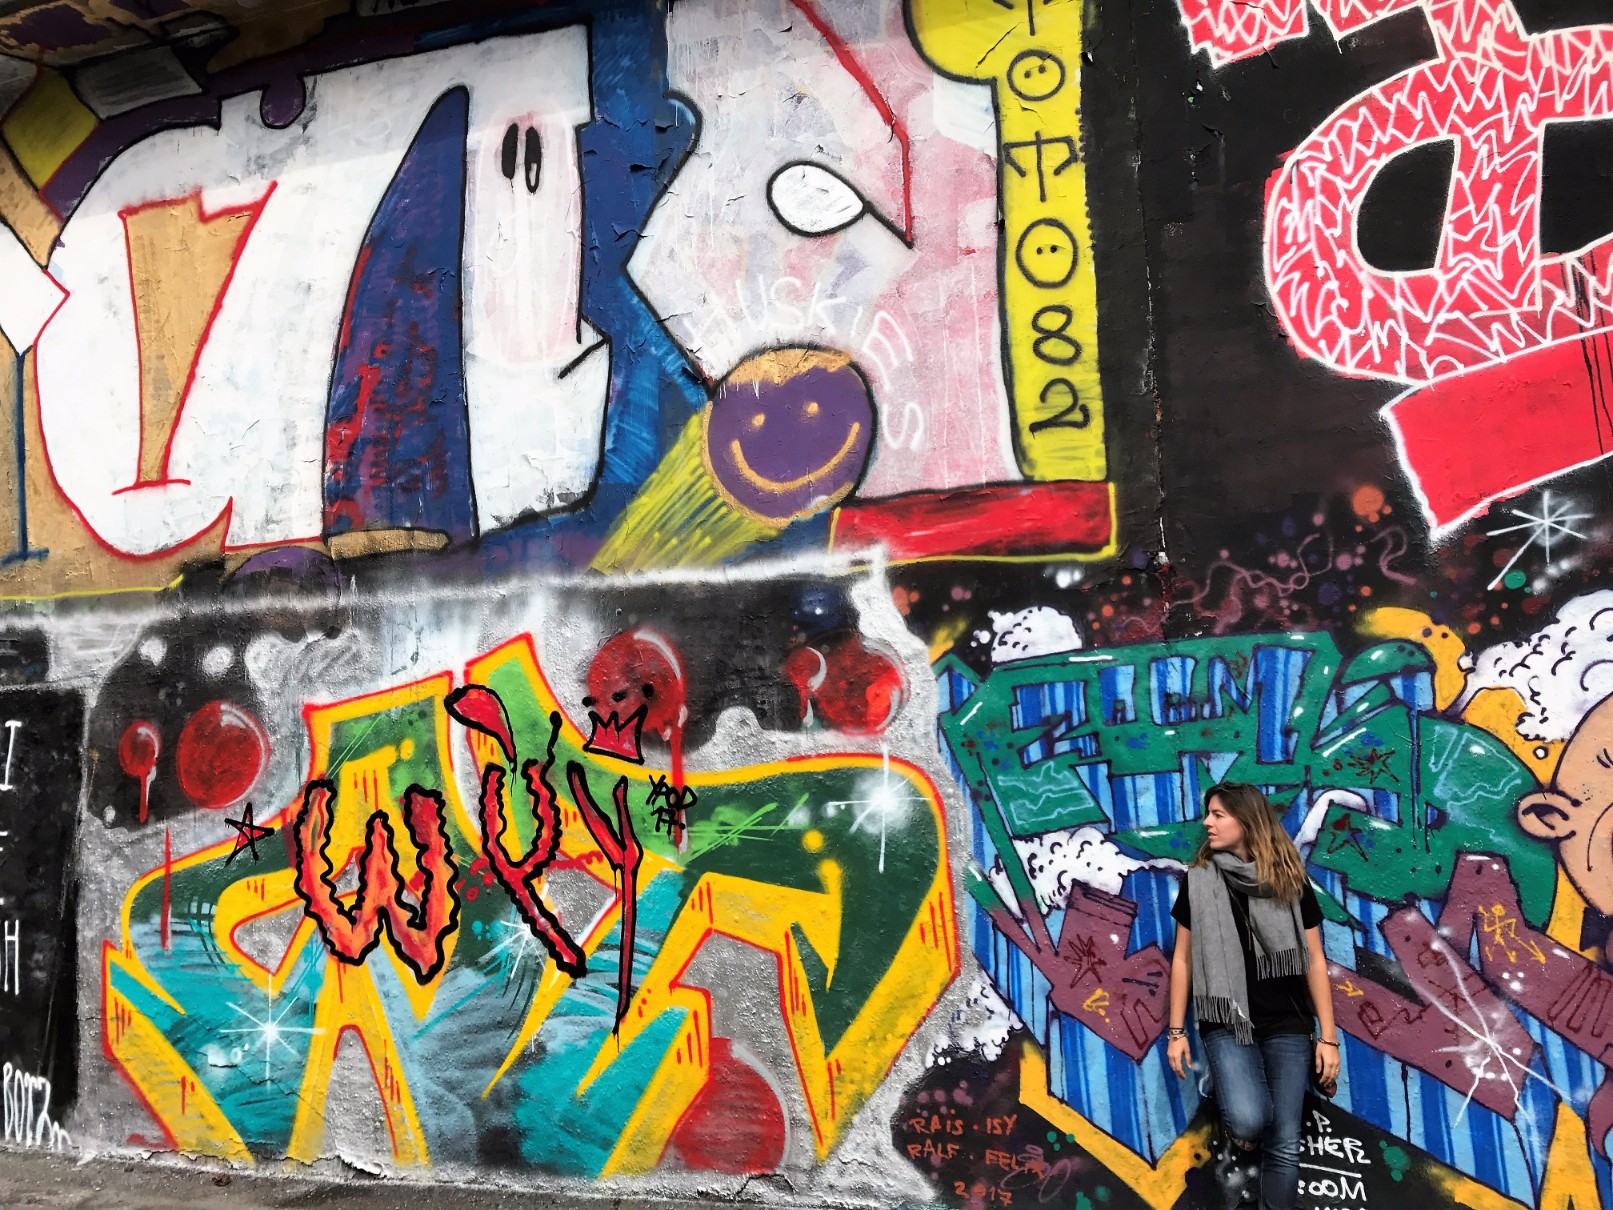 Prague's graffiti wall